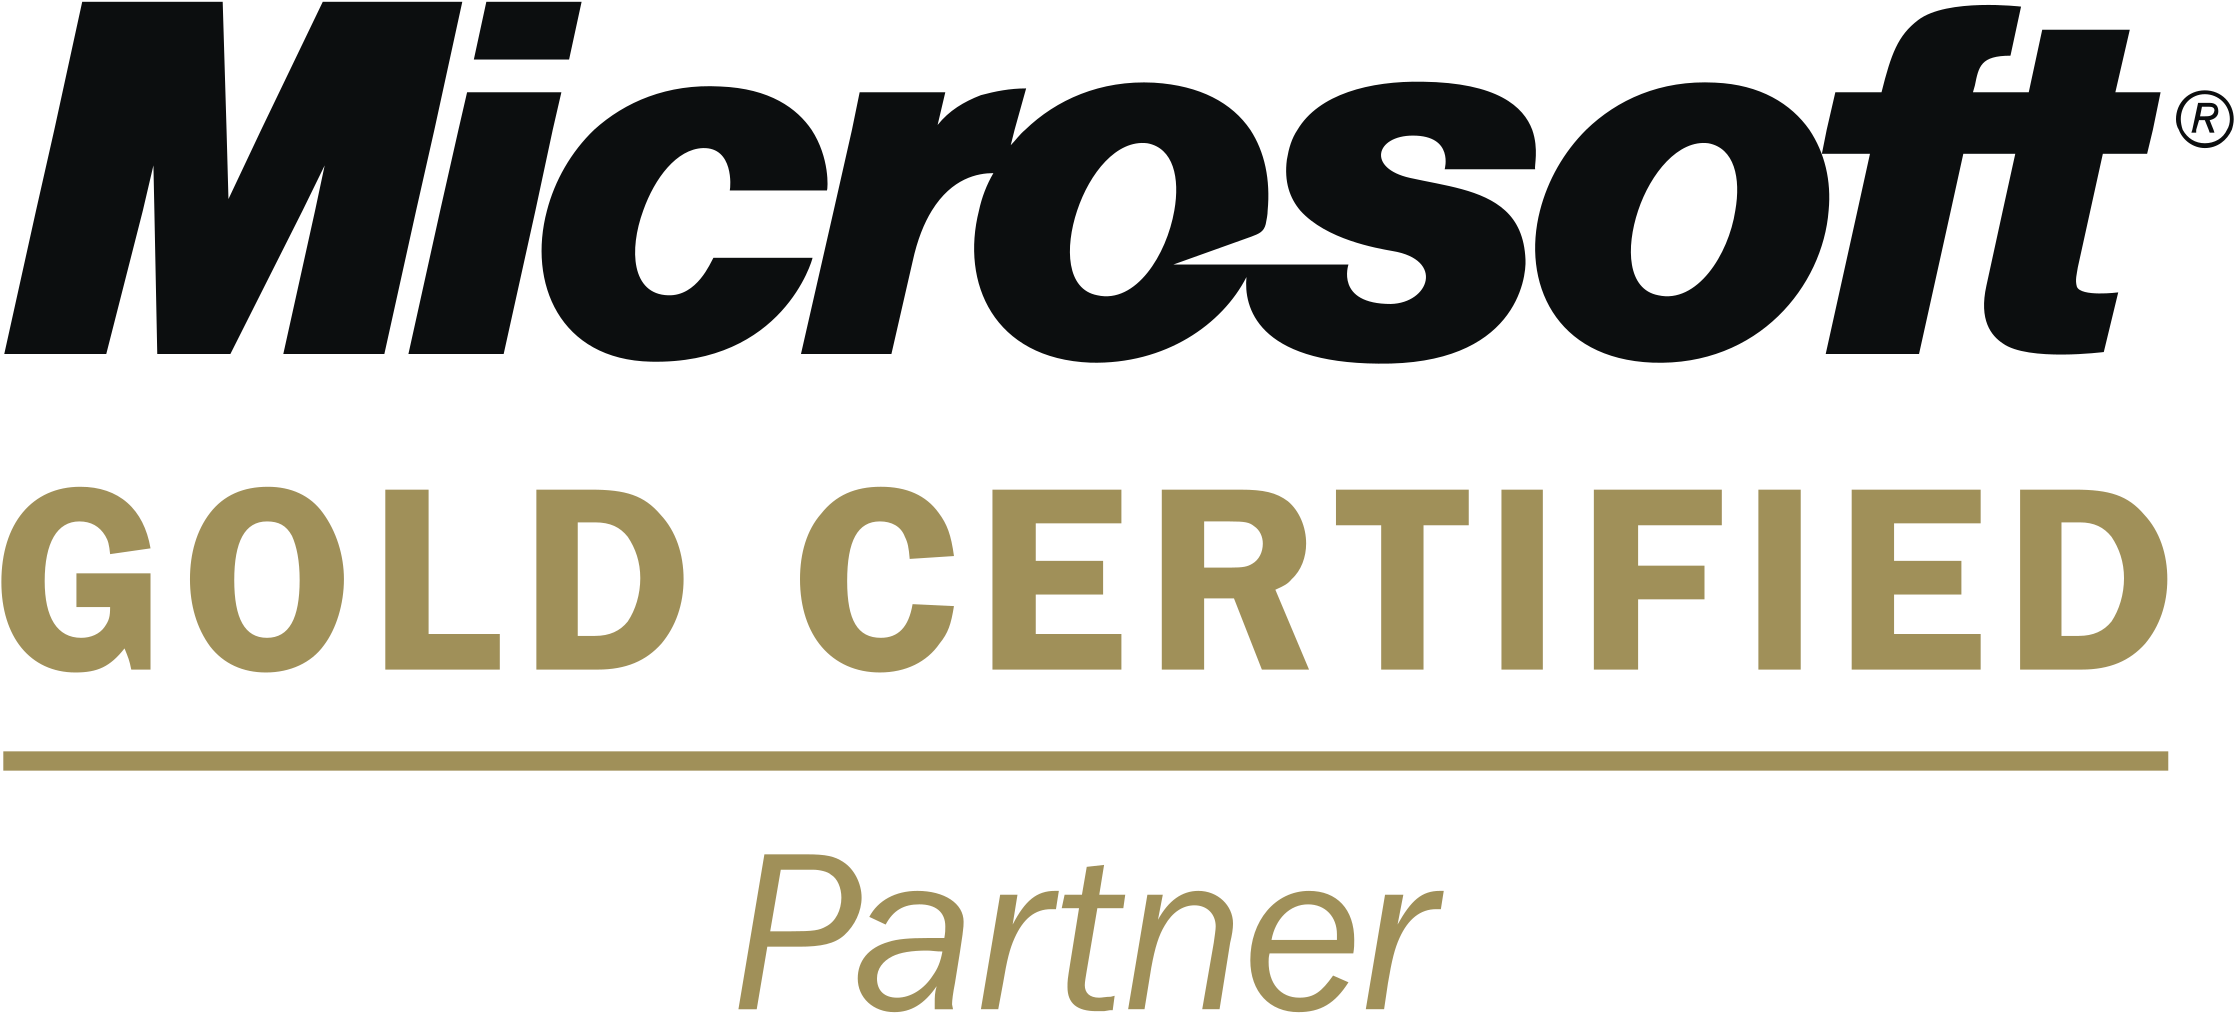 Microsoft Gold Certified Partner Logo Png Transparent - Microsoft Gold Certified Partner Logo Png (2400x2400), Png Download